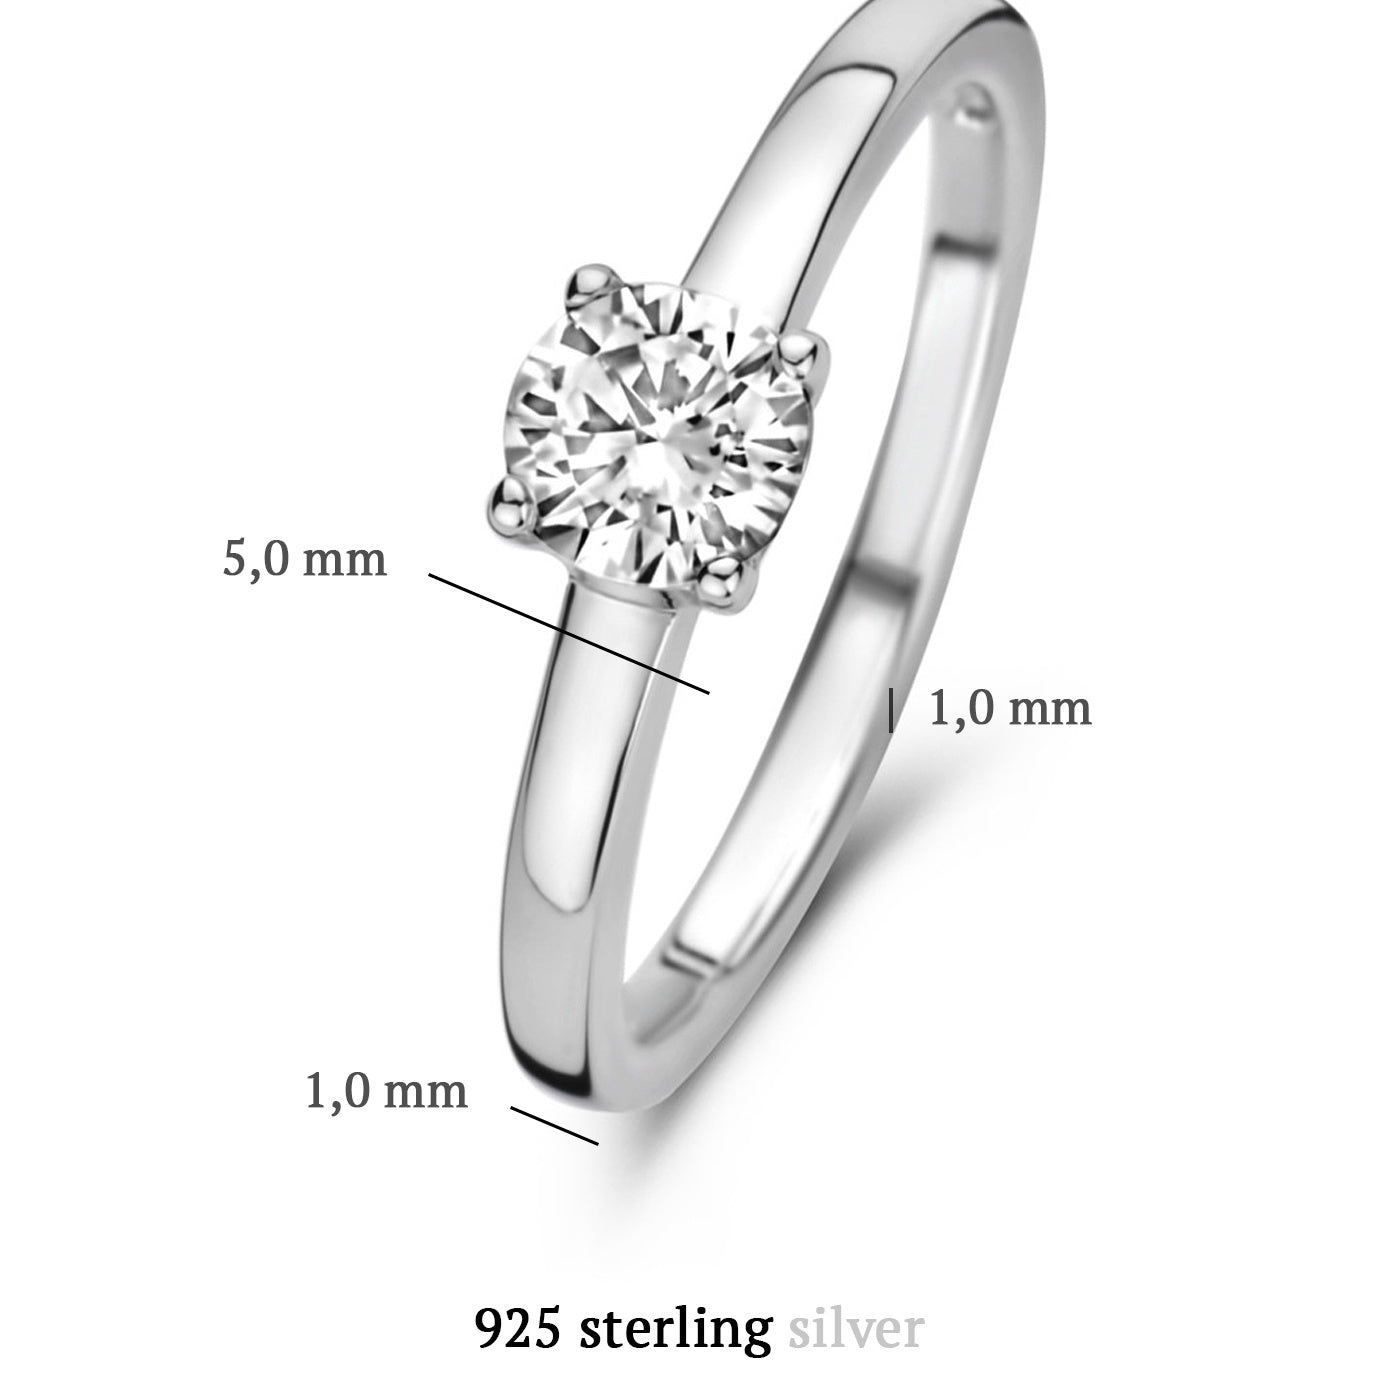 Ponte Vecchio Sofia 925 sterling silver ring with zirconia stone